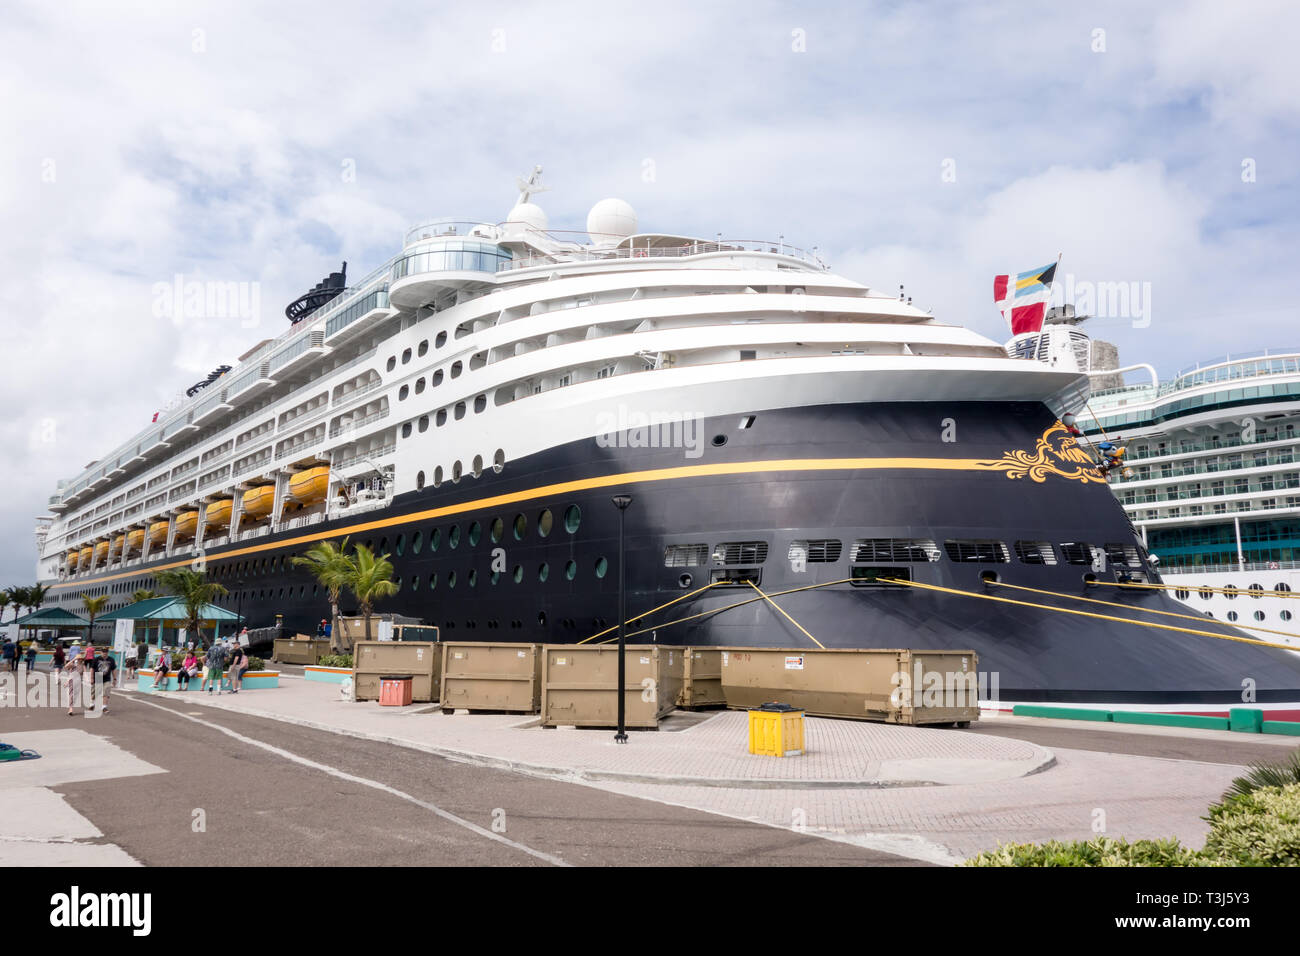 Disney Cruise is being docked at Nassau's cruise port terminal in Bahamas. Stock Photo